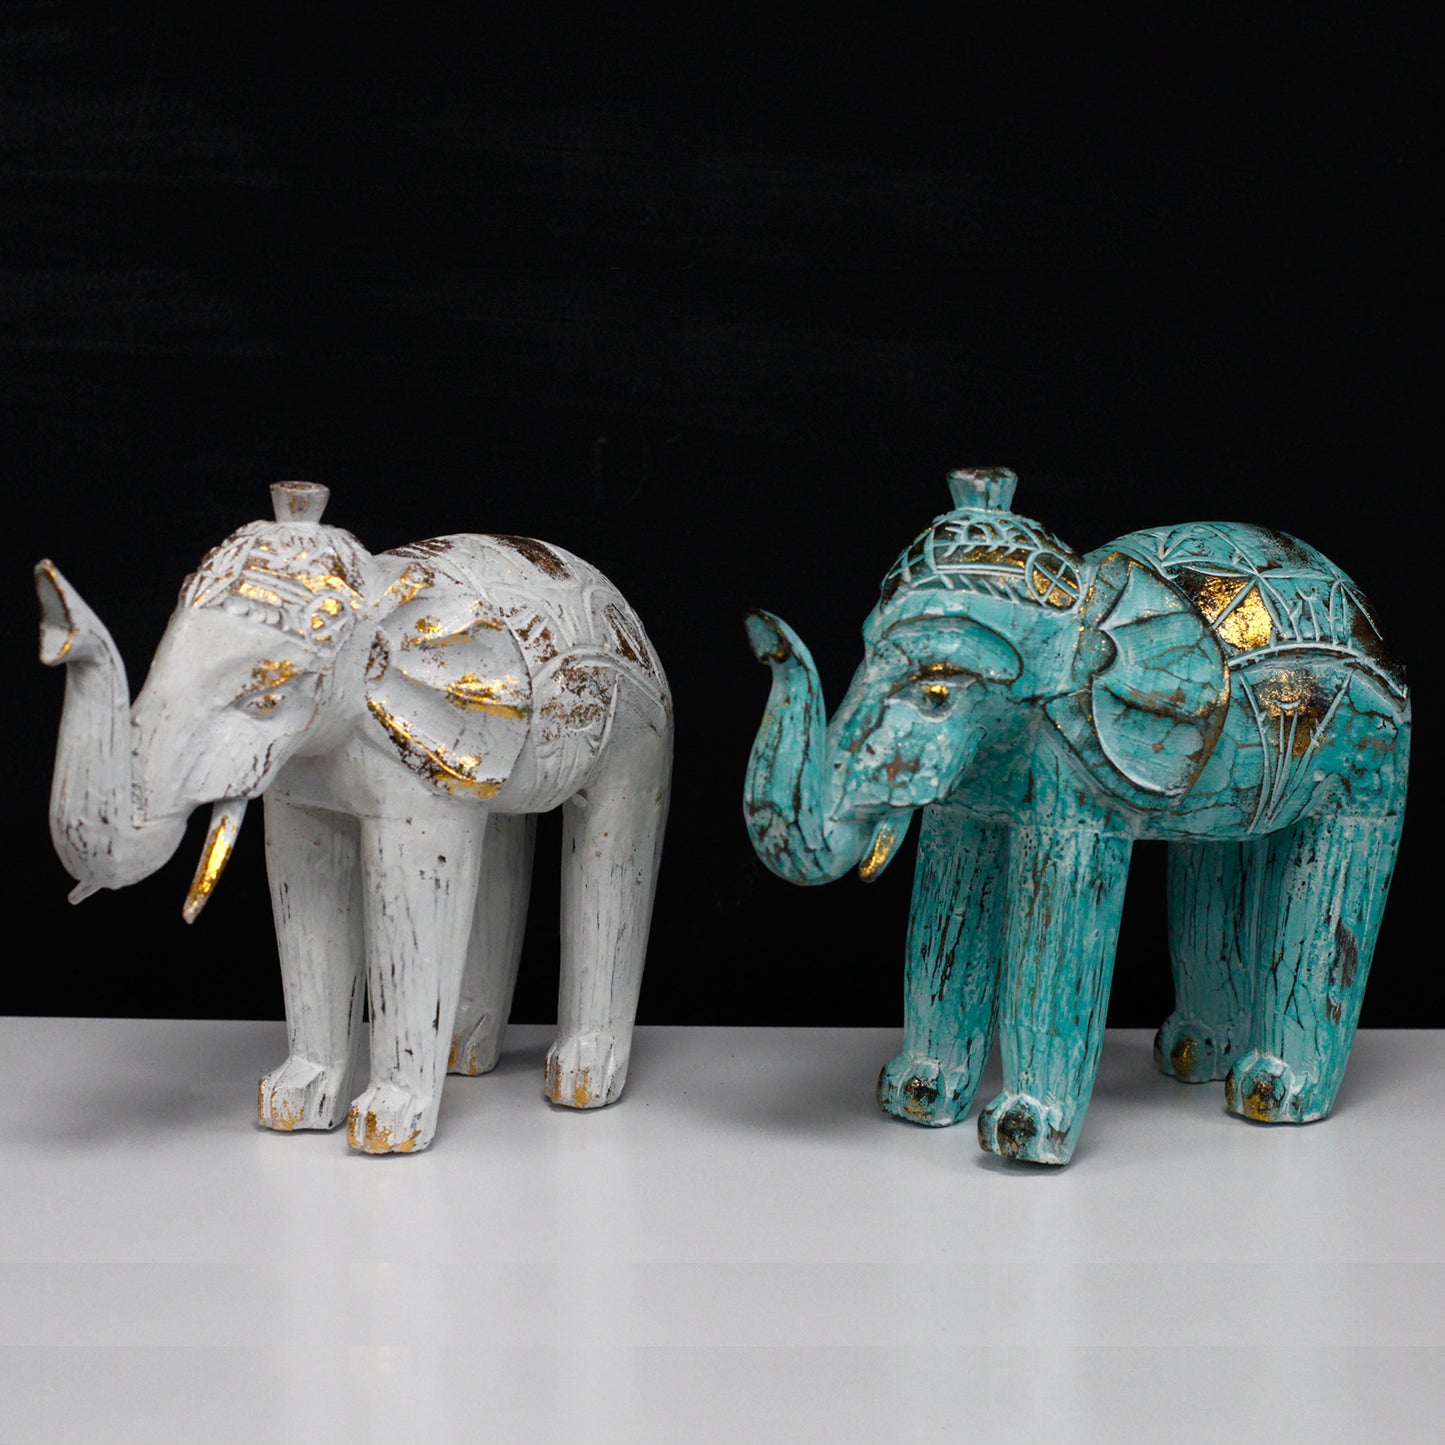 Wood Carved Elephant - Turquoise Gold